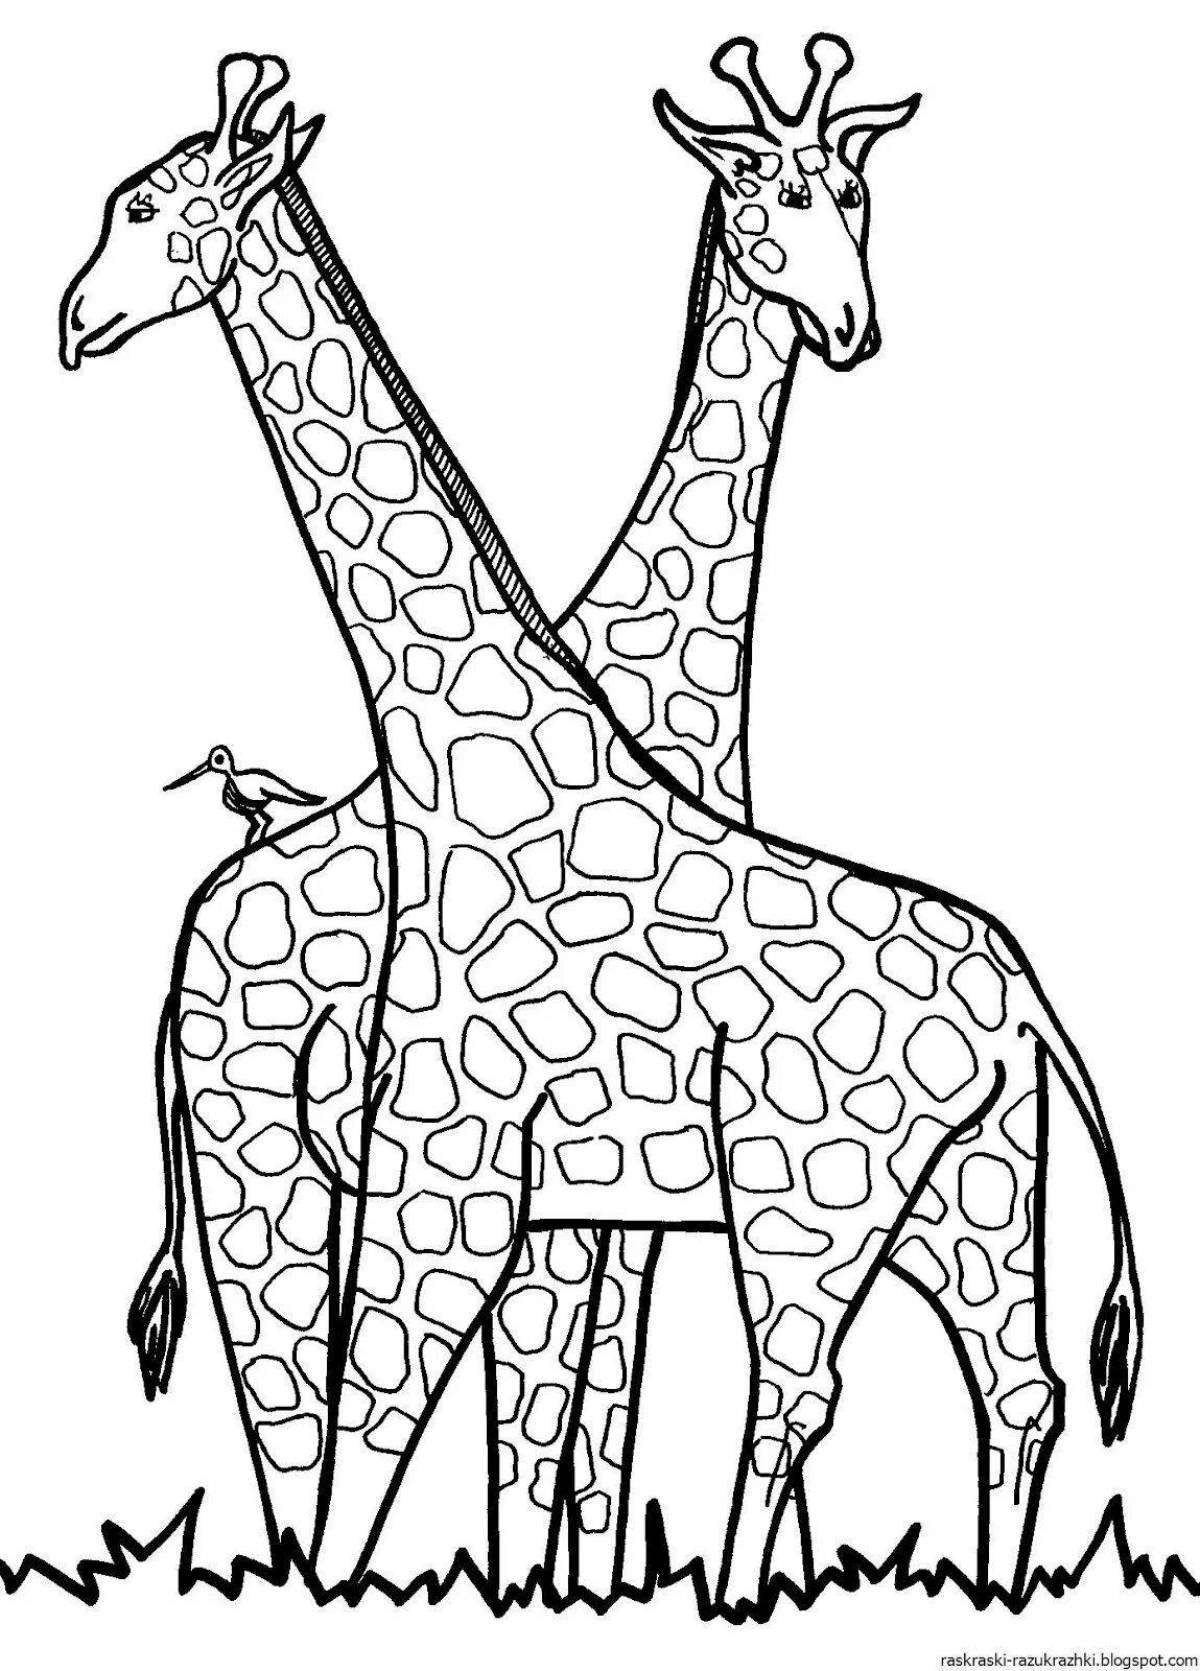 Playful giraffe drawing for kids